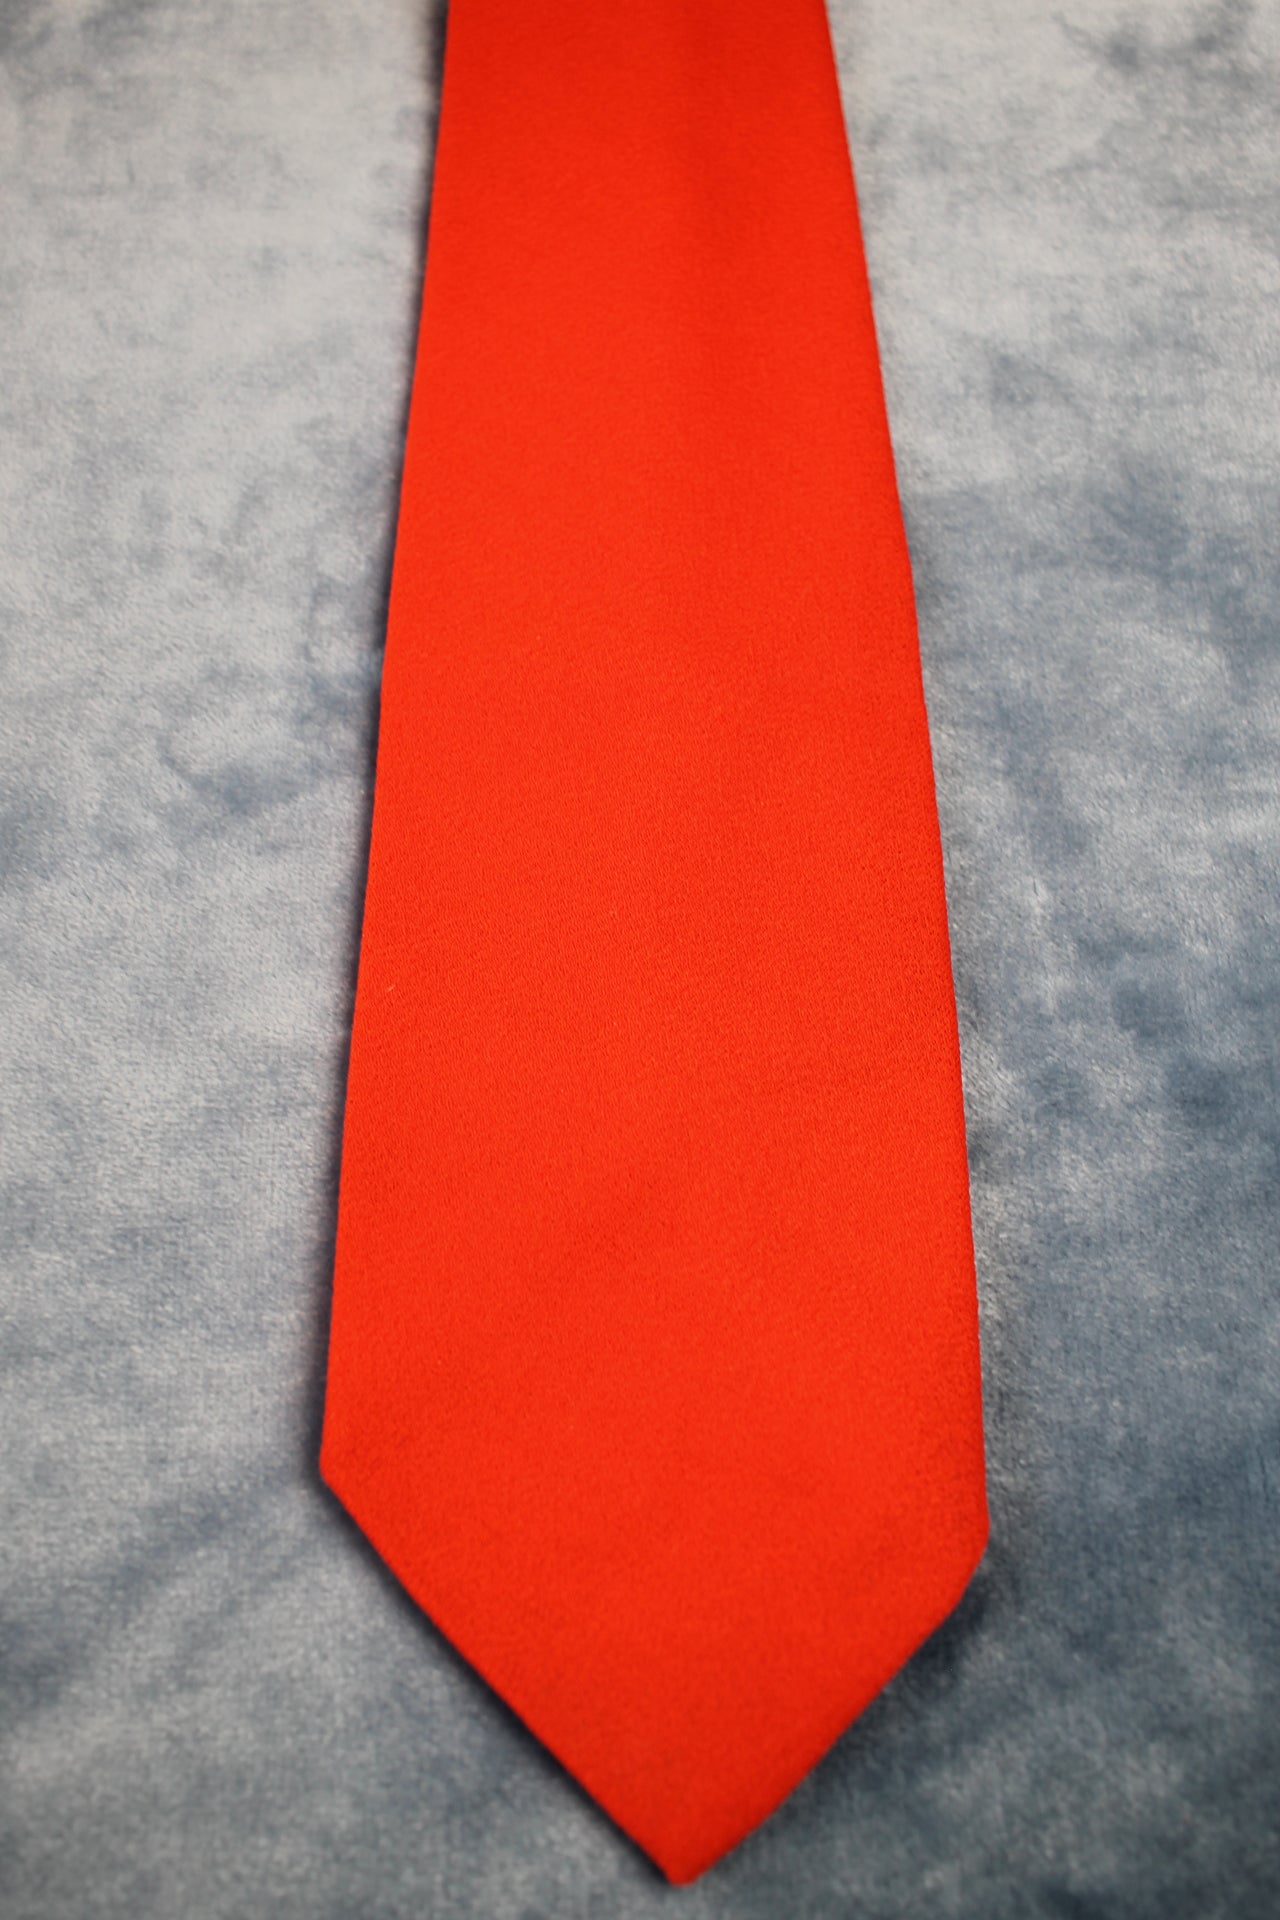 Vintage1940s/50s red swing tie